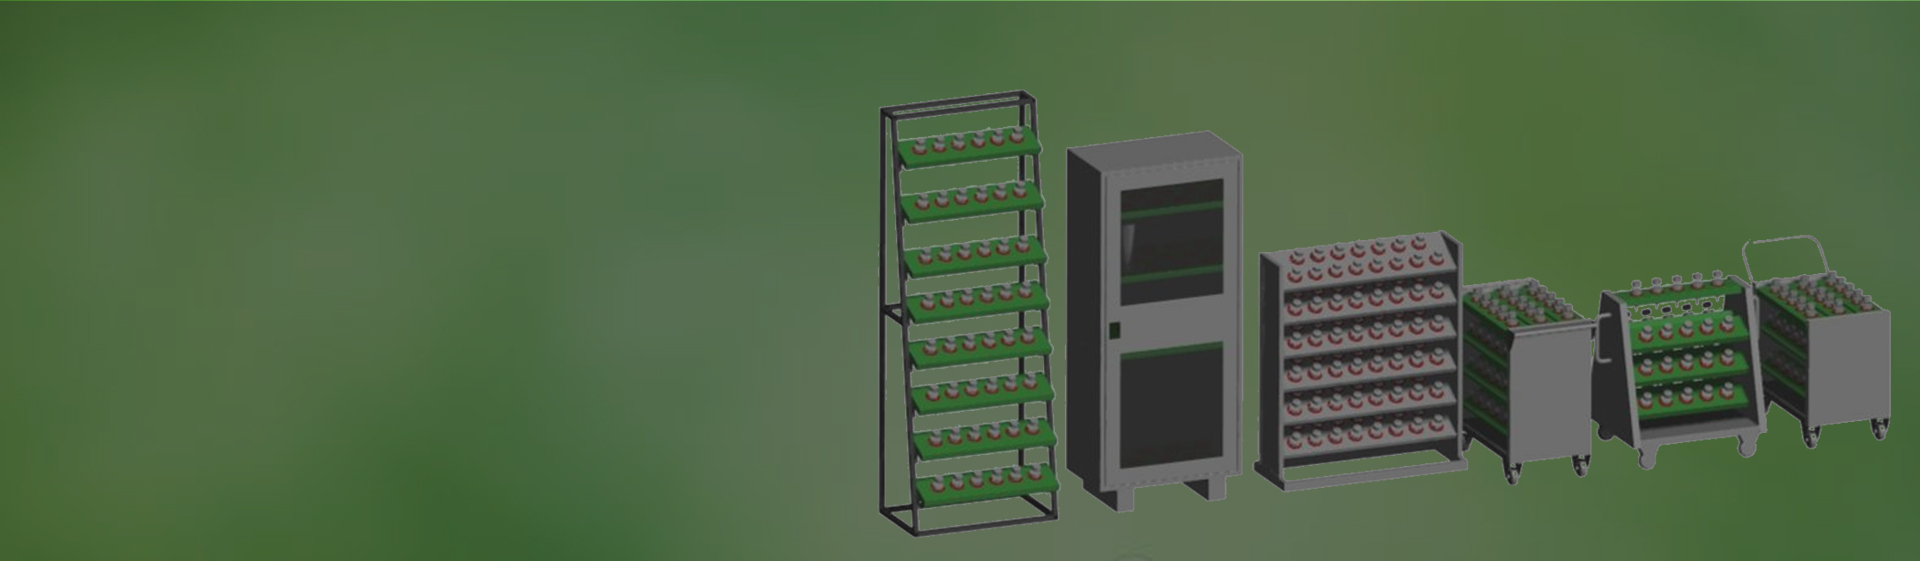 Customized Tool Storage Systems